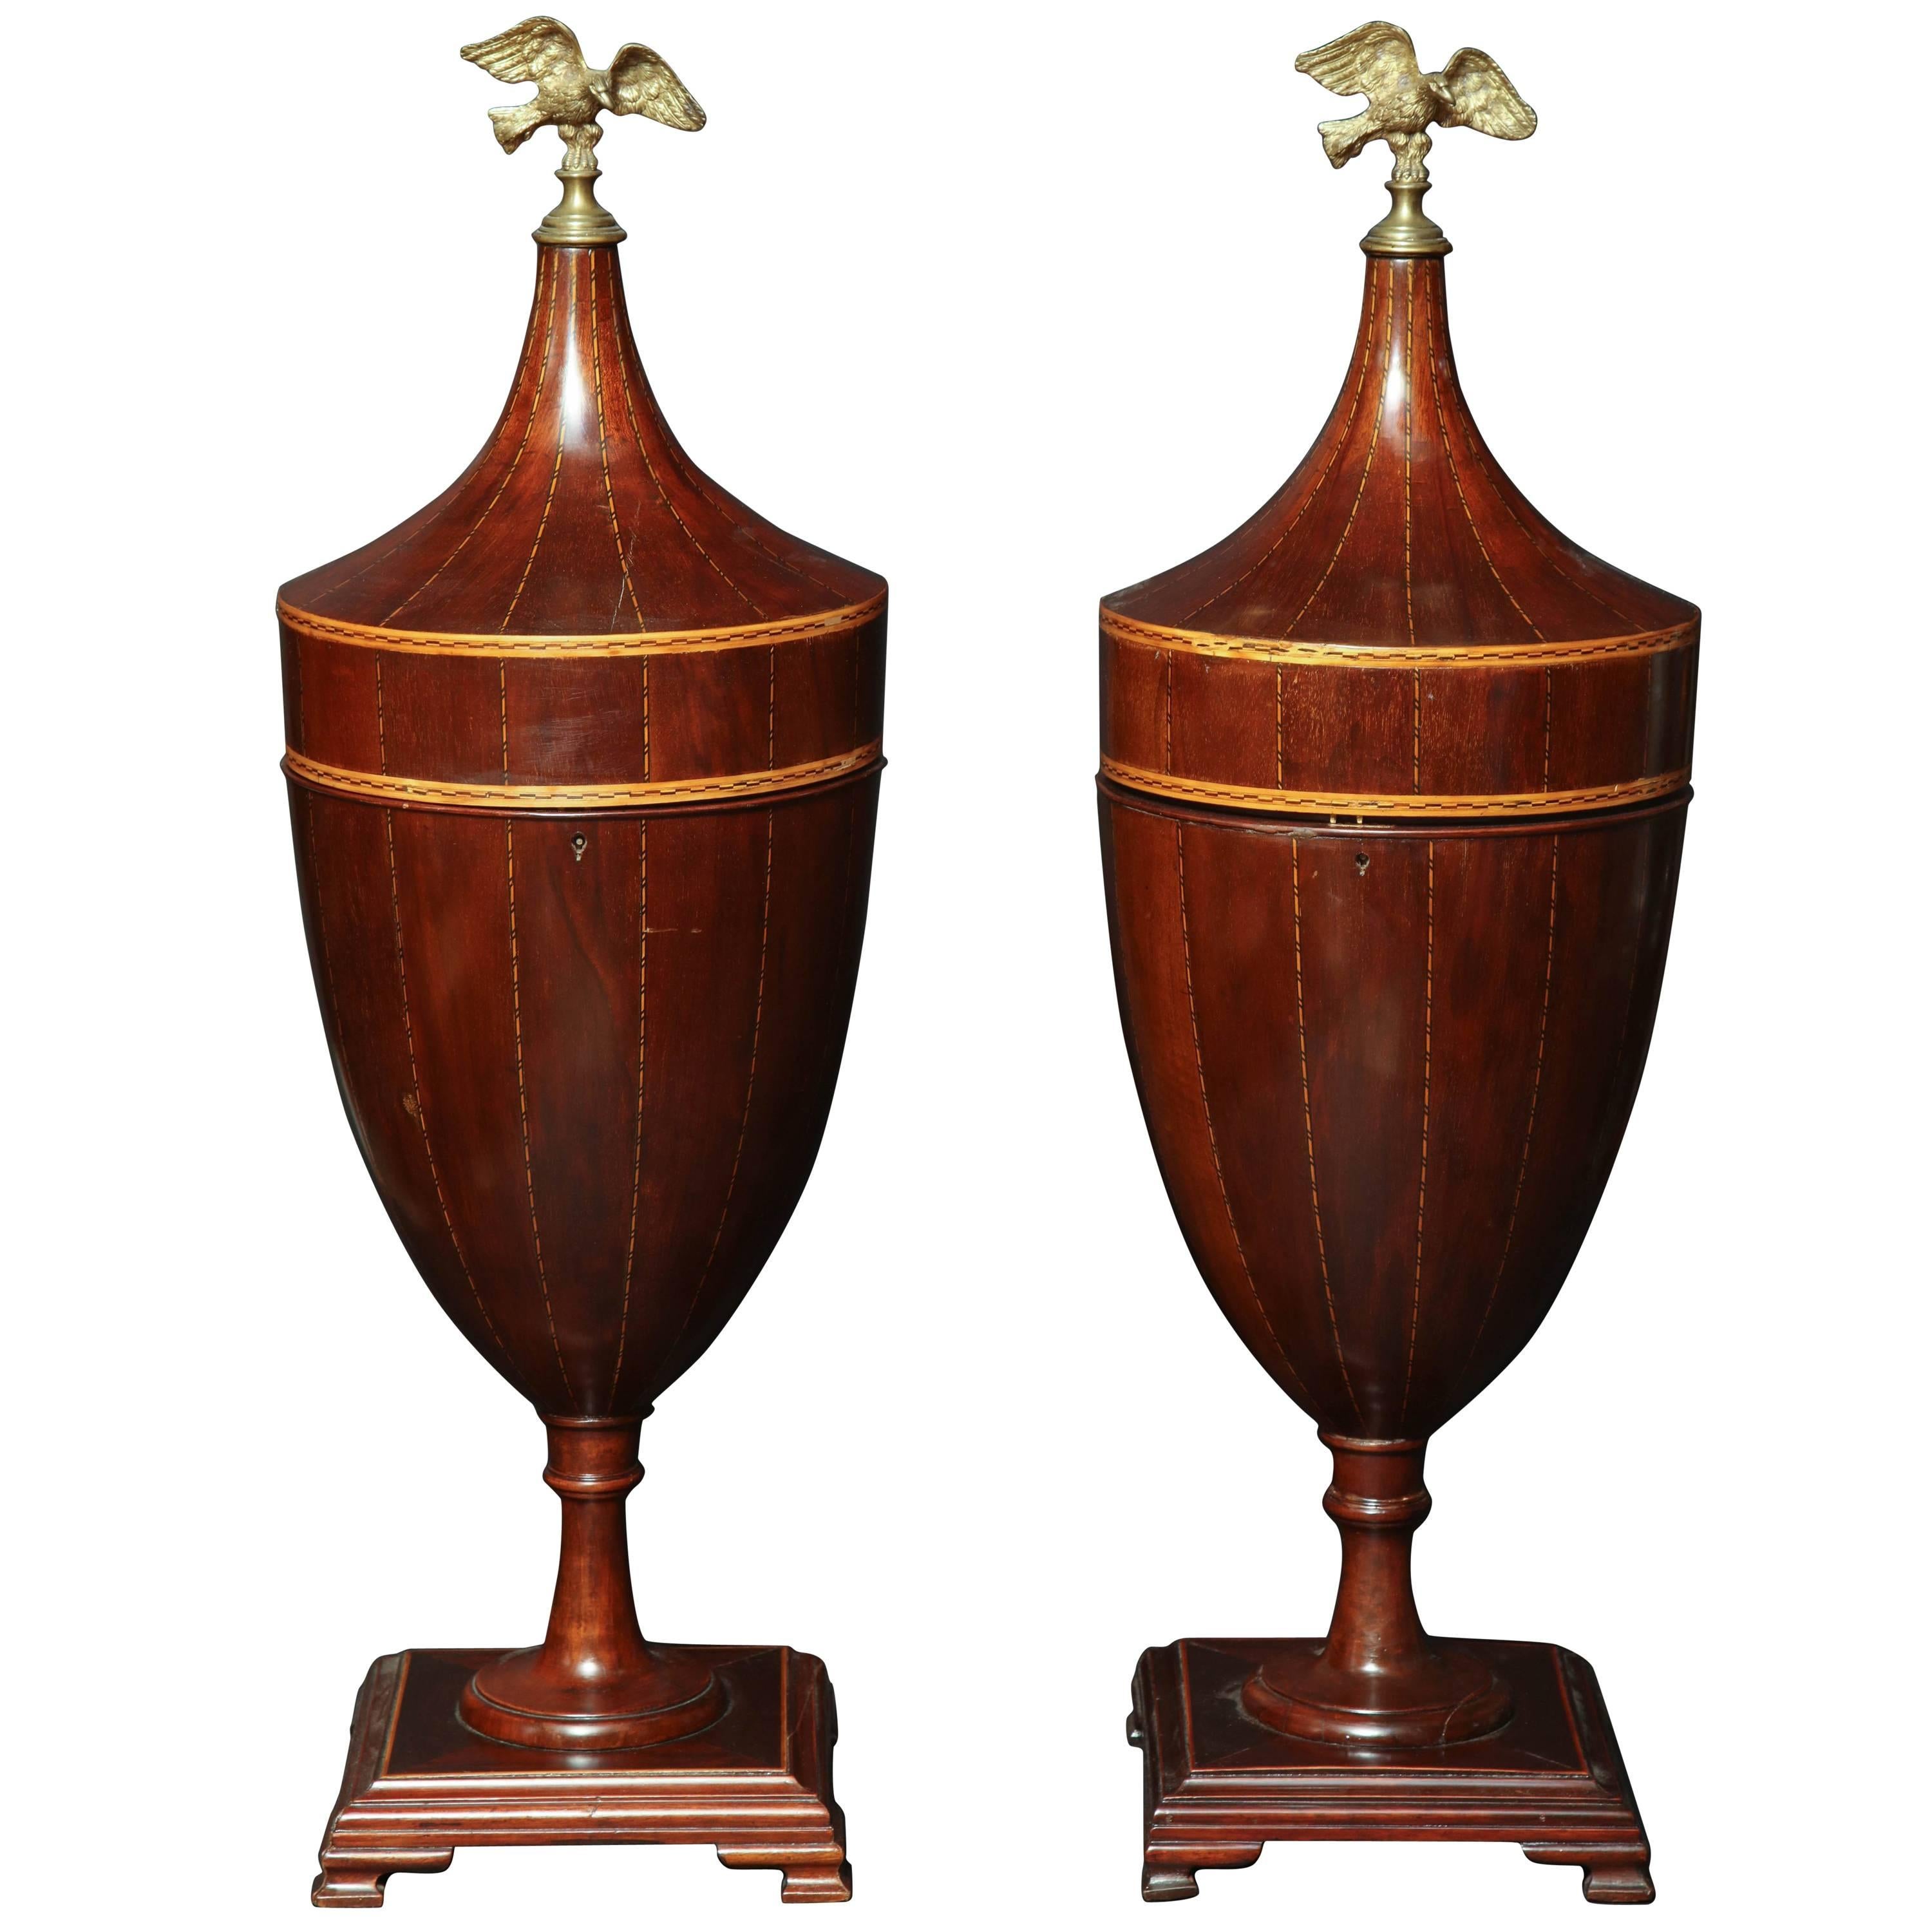 Pair of Classical Mahogany Urns